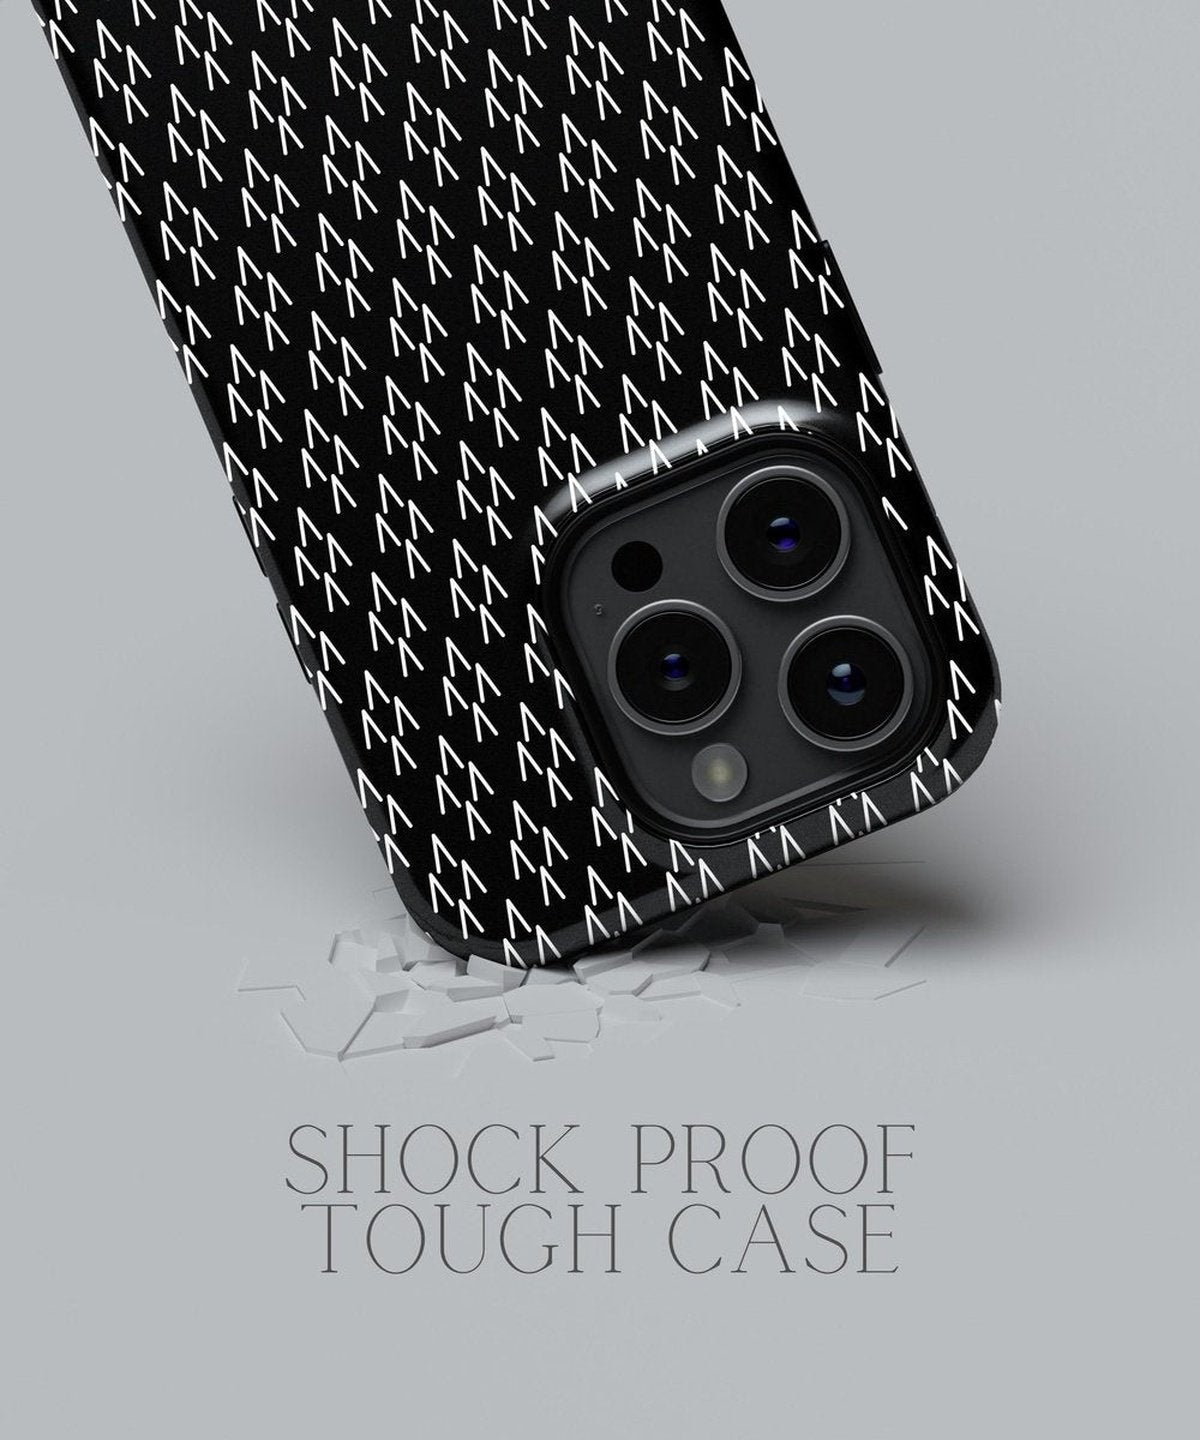 Ivory Intricacies: Exploring Monochrome Sensuality - iPhone Case-Monochrome Seduction Case-Tousphone-Tough Case-iPhone 15 Pro Max-Tousphone